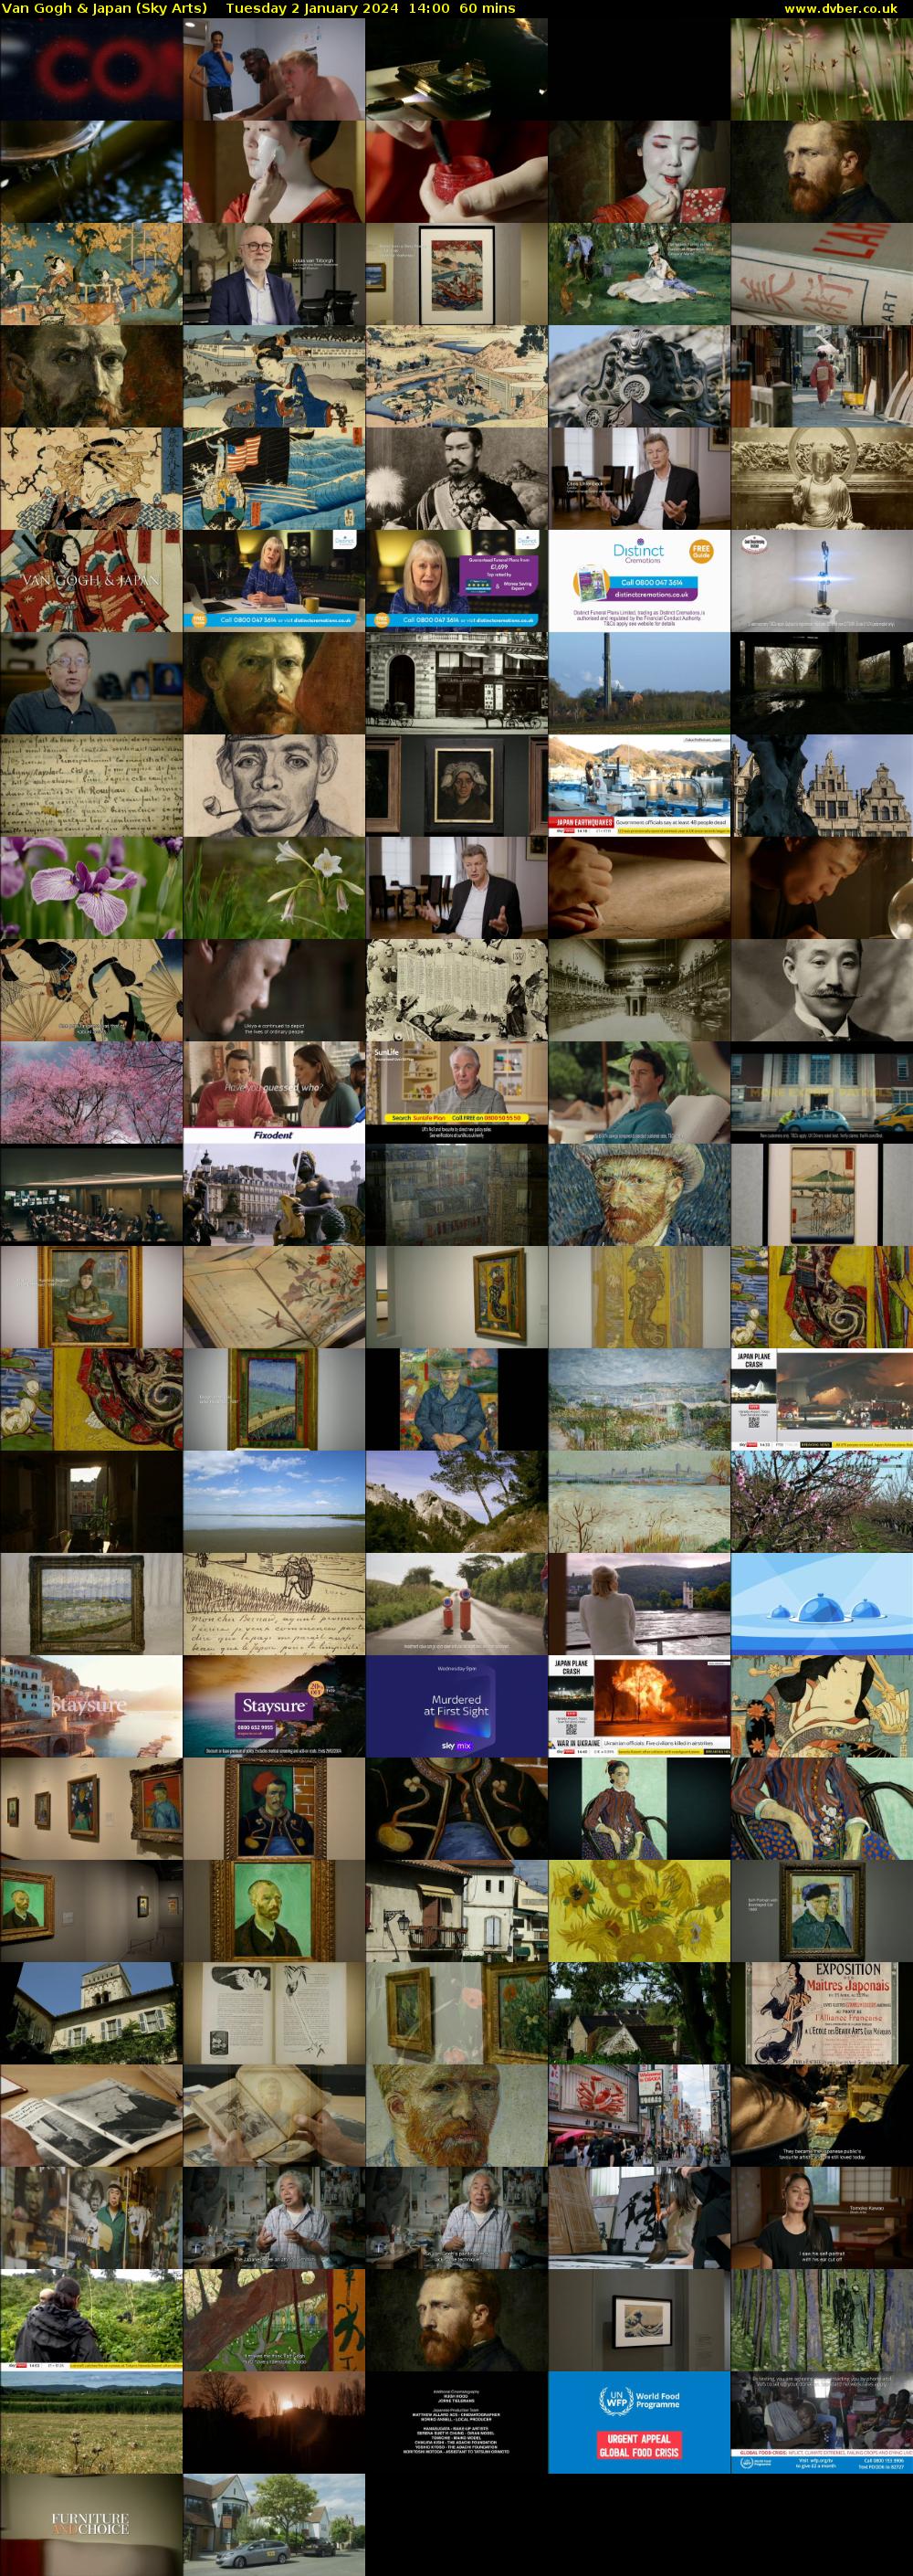 Van Gogh & Japan (Sky Arts) Tuesday 2 January 2024 14:00 - 15:00